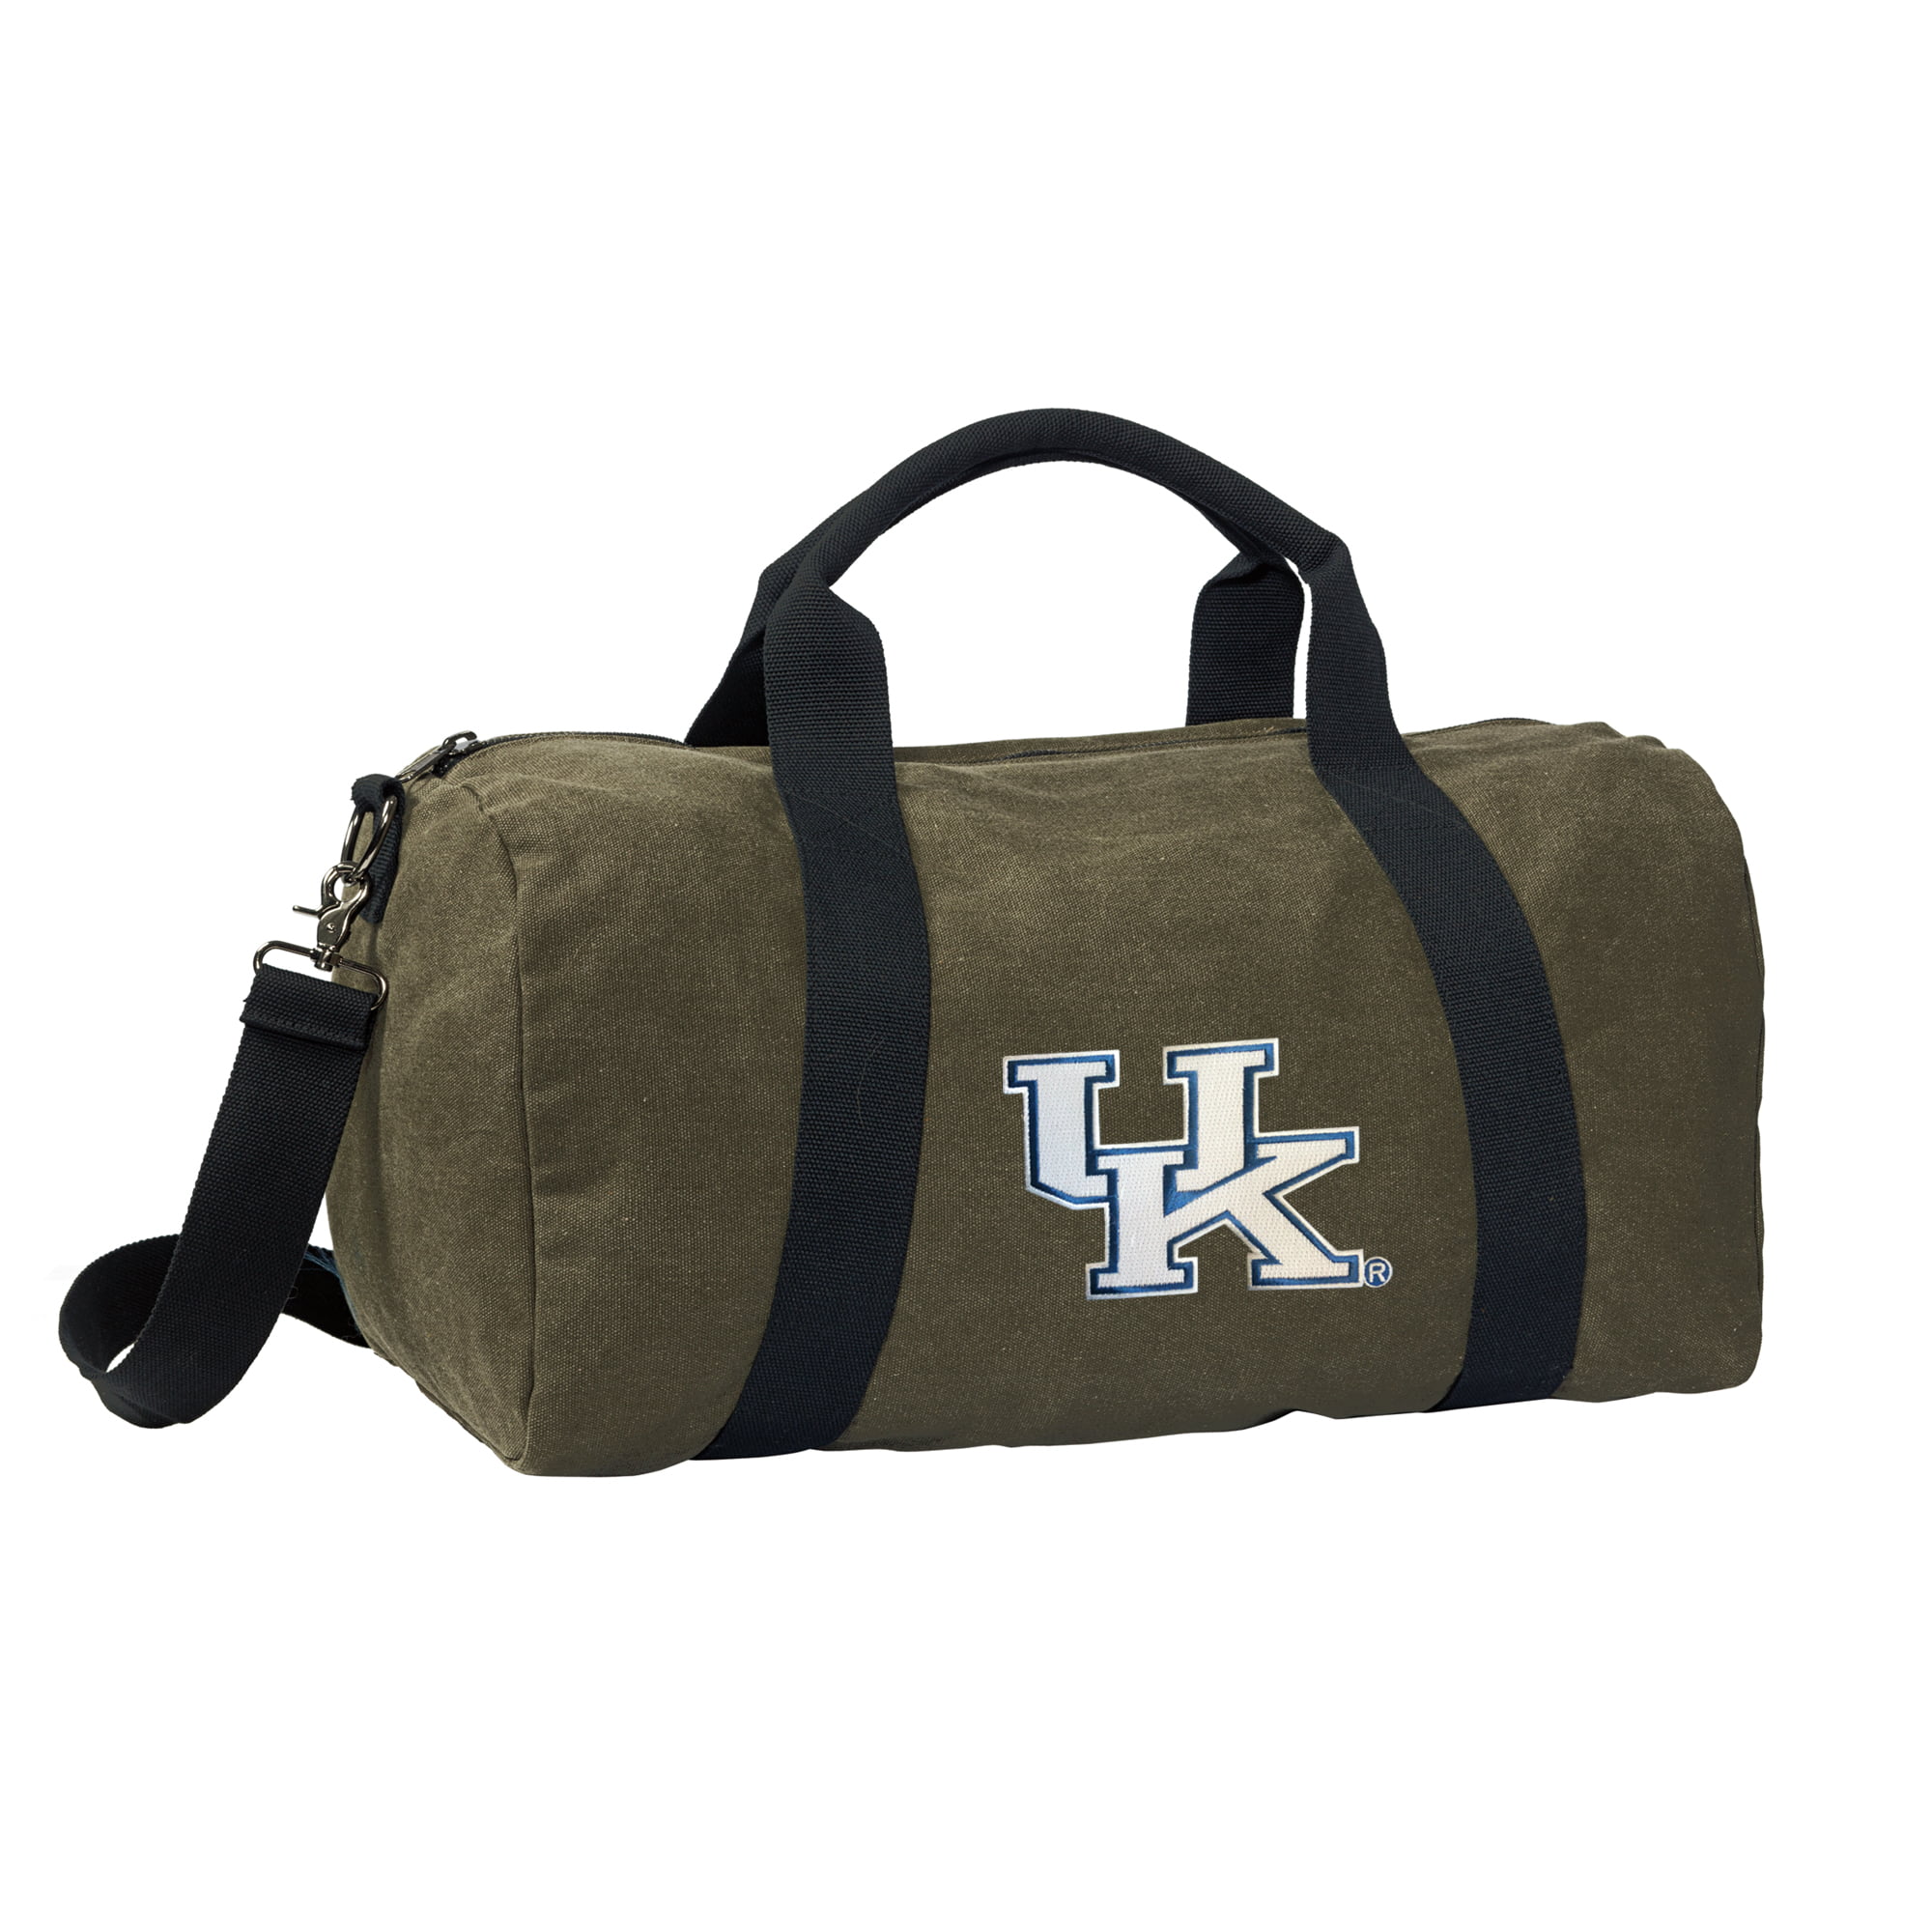 Broad Bay Kentucky Wildcats Suitcase Duffel Bag Large University of Kentucky Duffle Idea for Men or Her! 